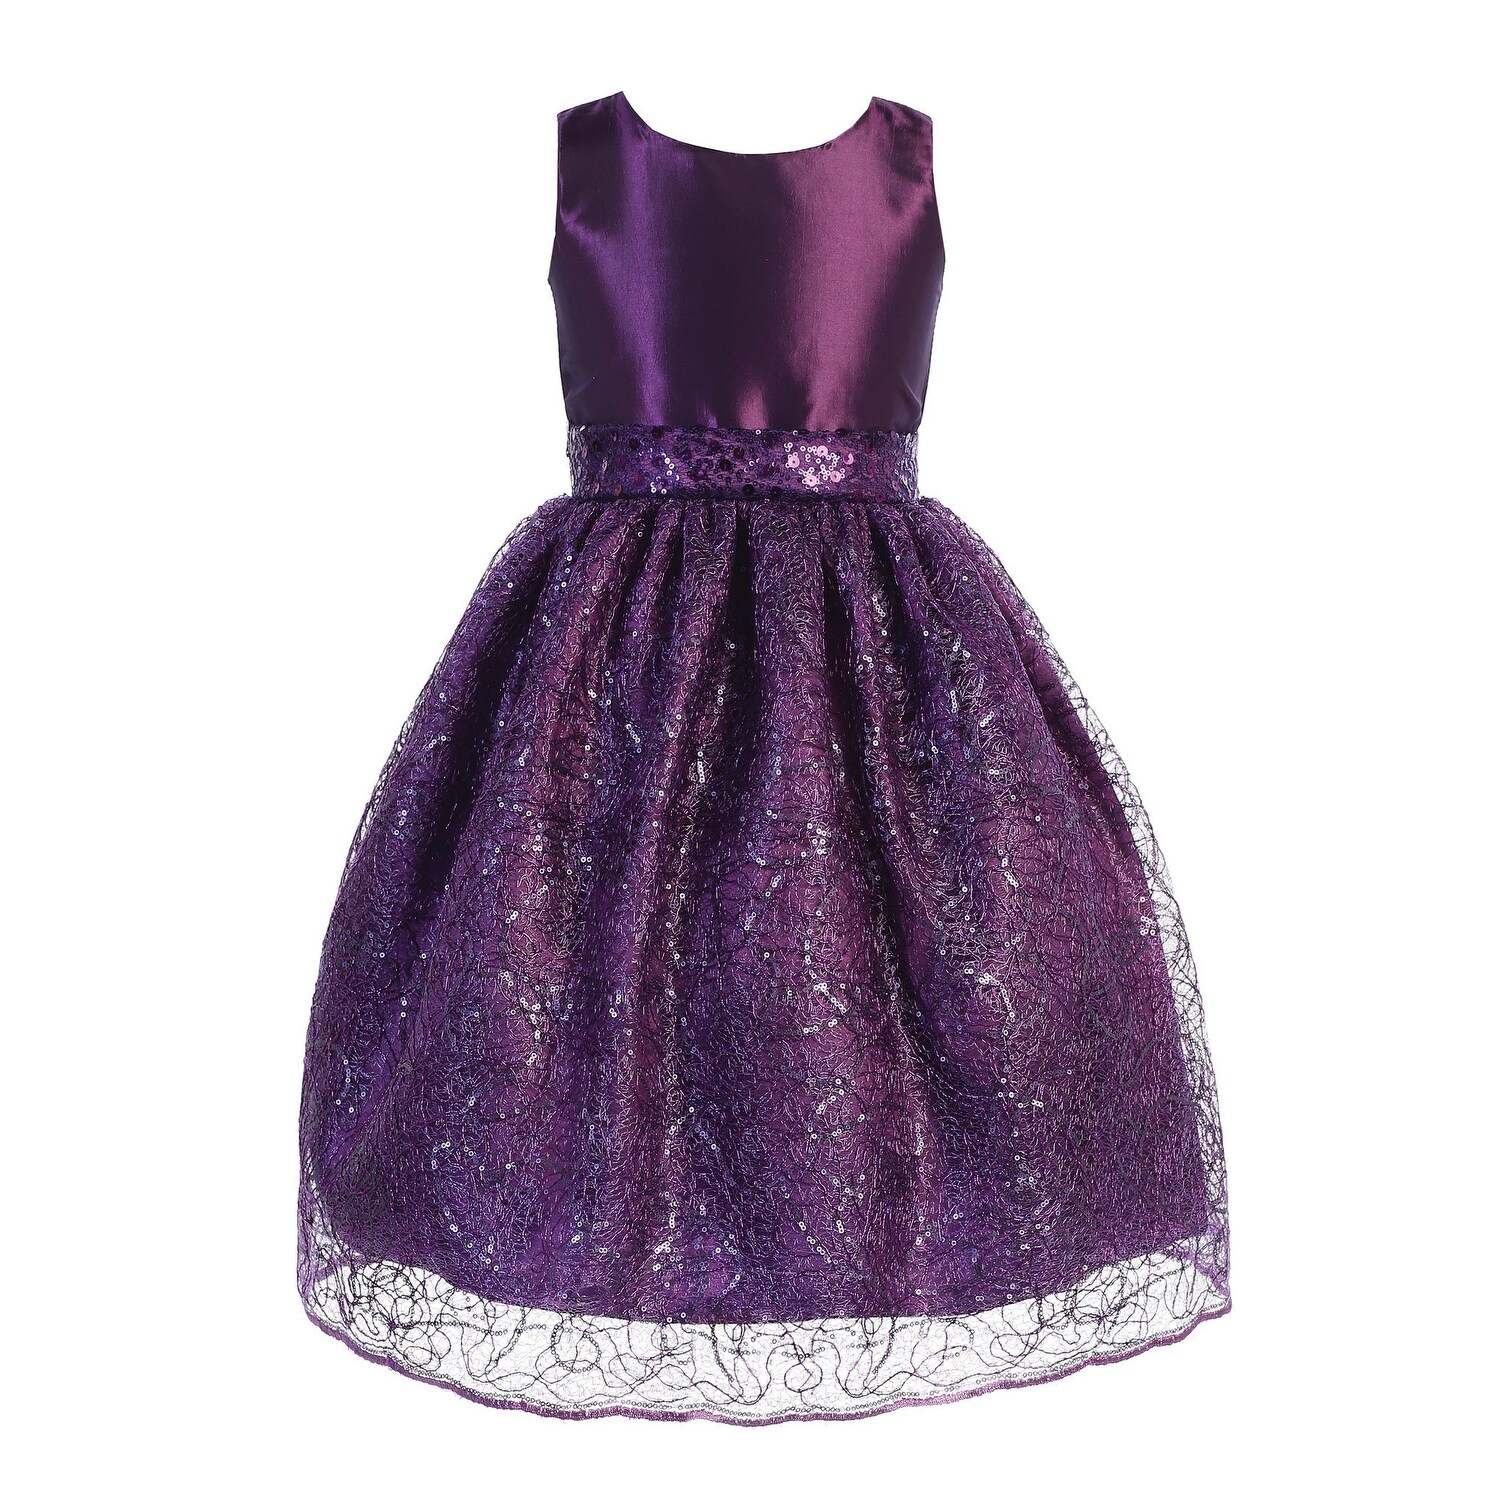 purple taffeta dress